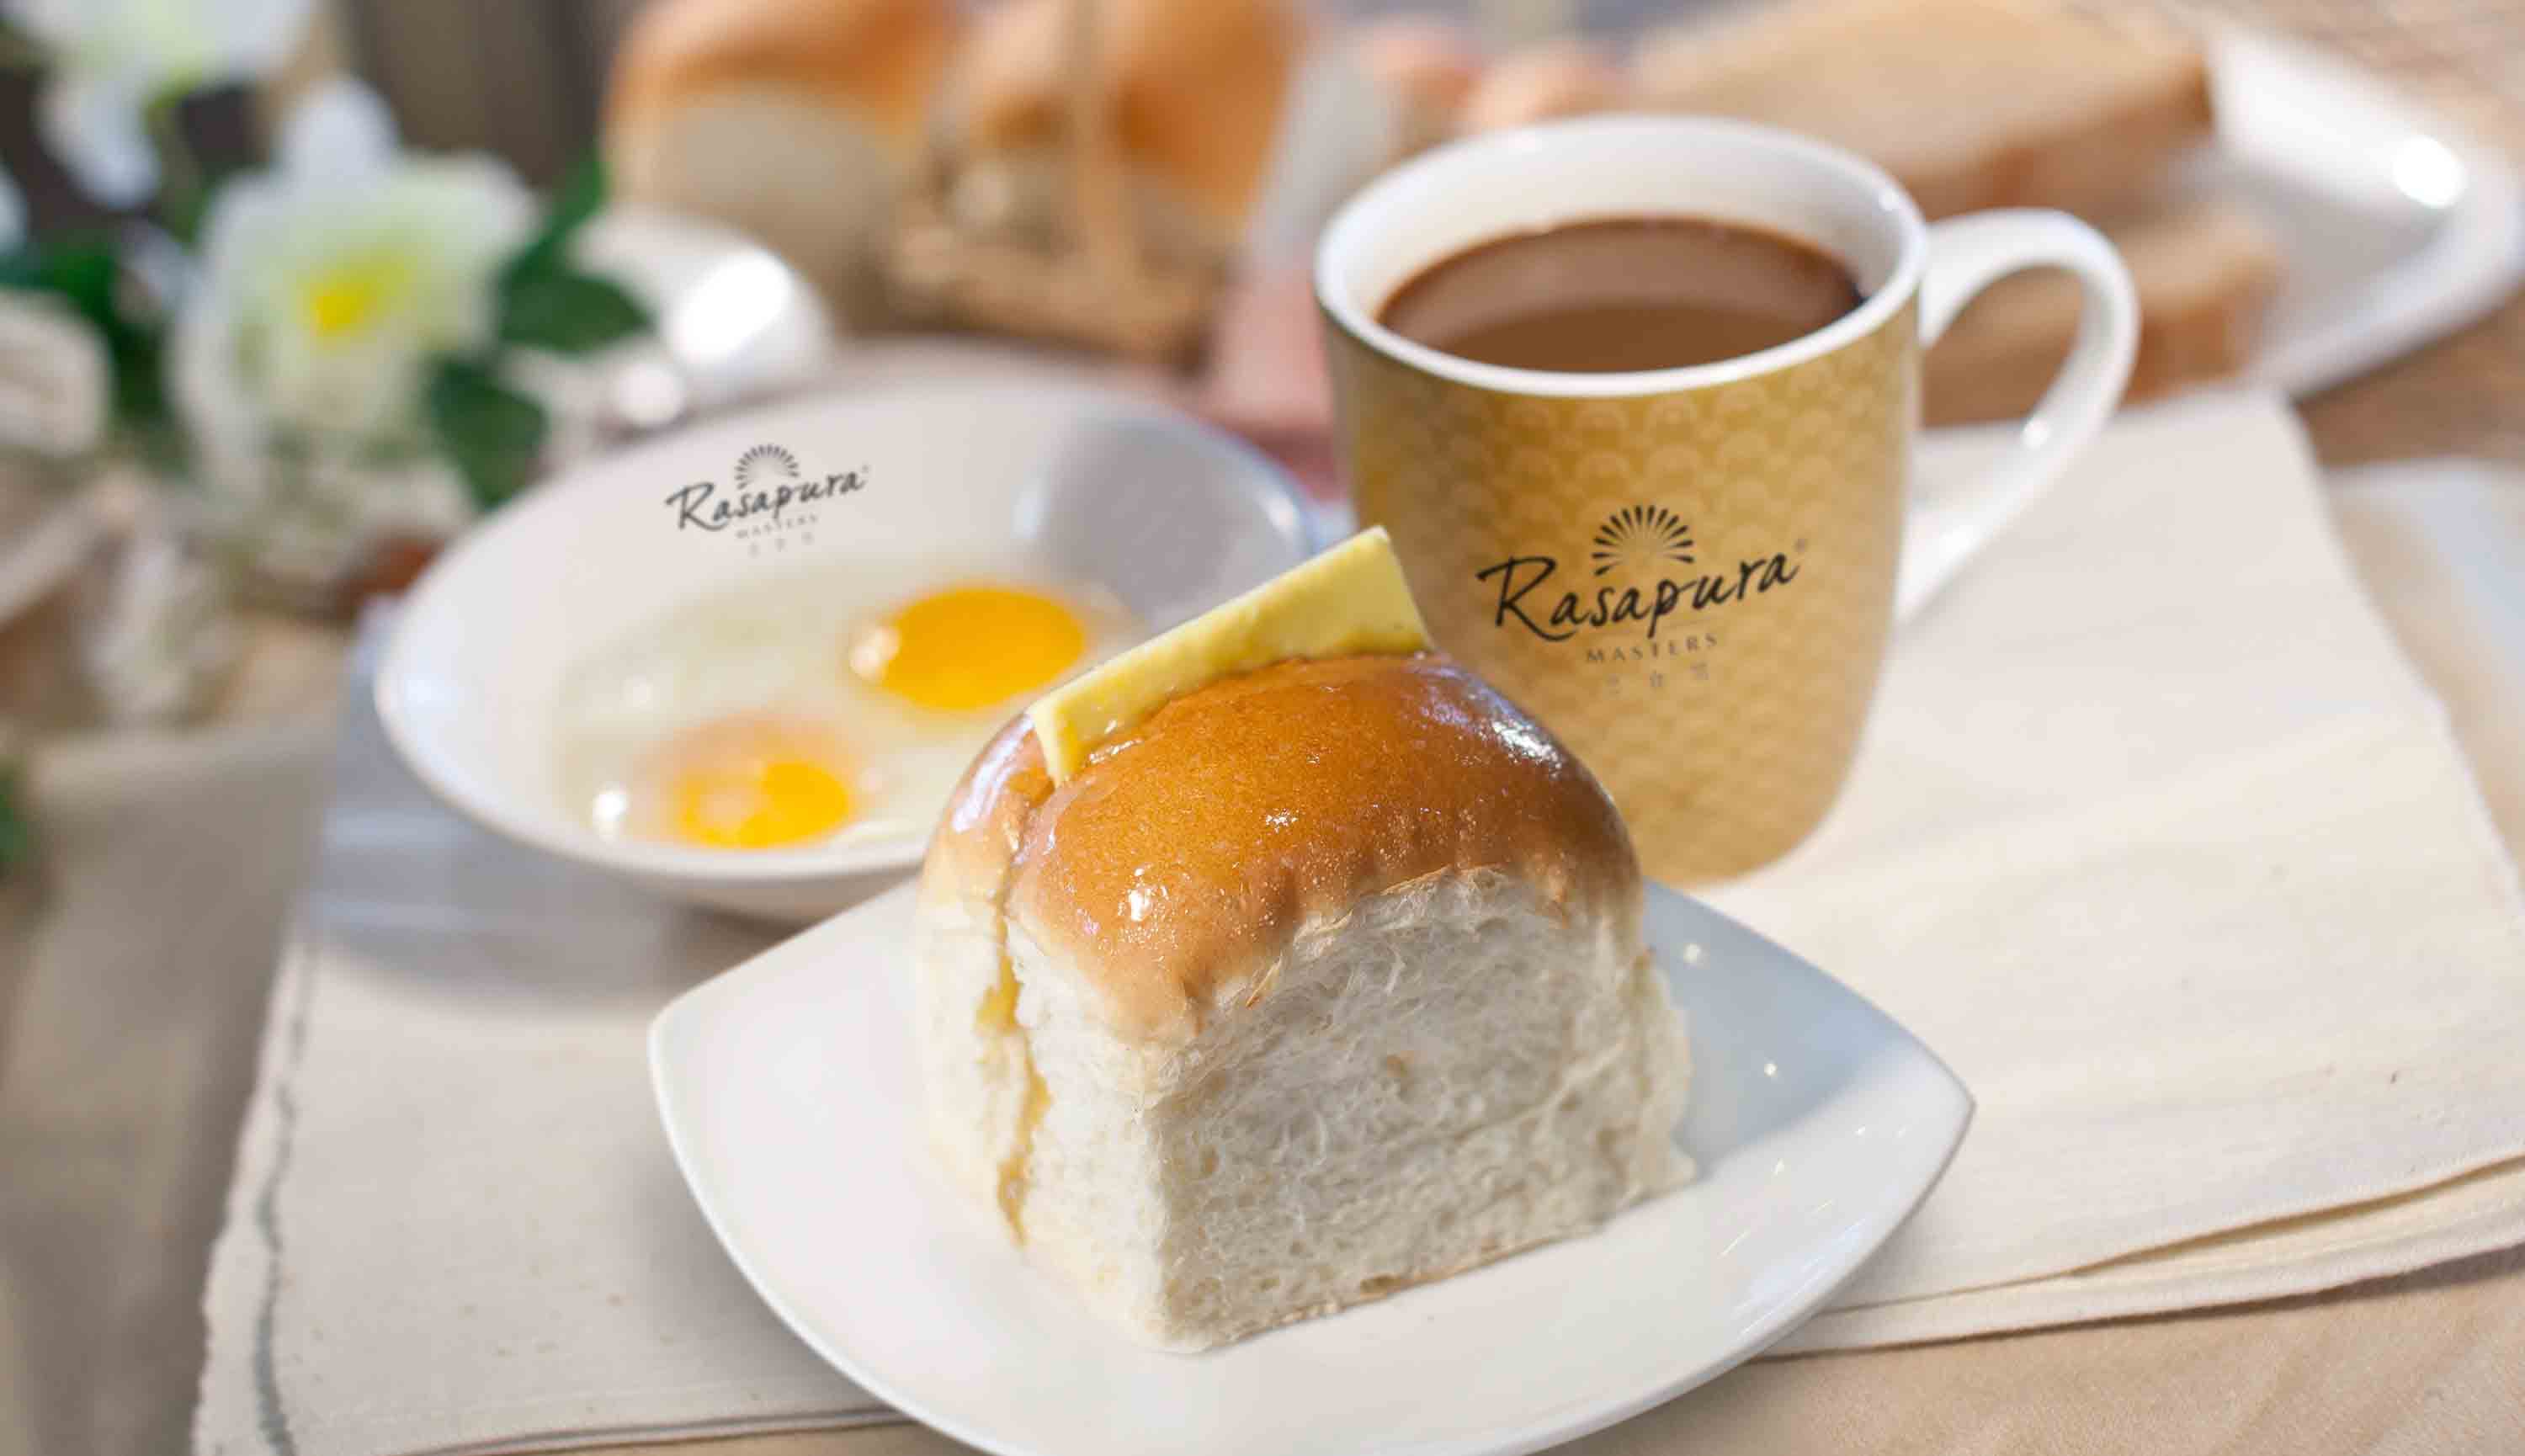 Rasapura Kaya Butter Bread and Coffee